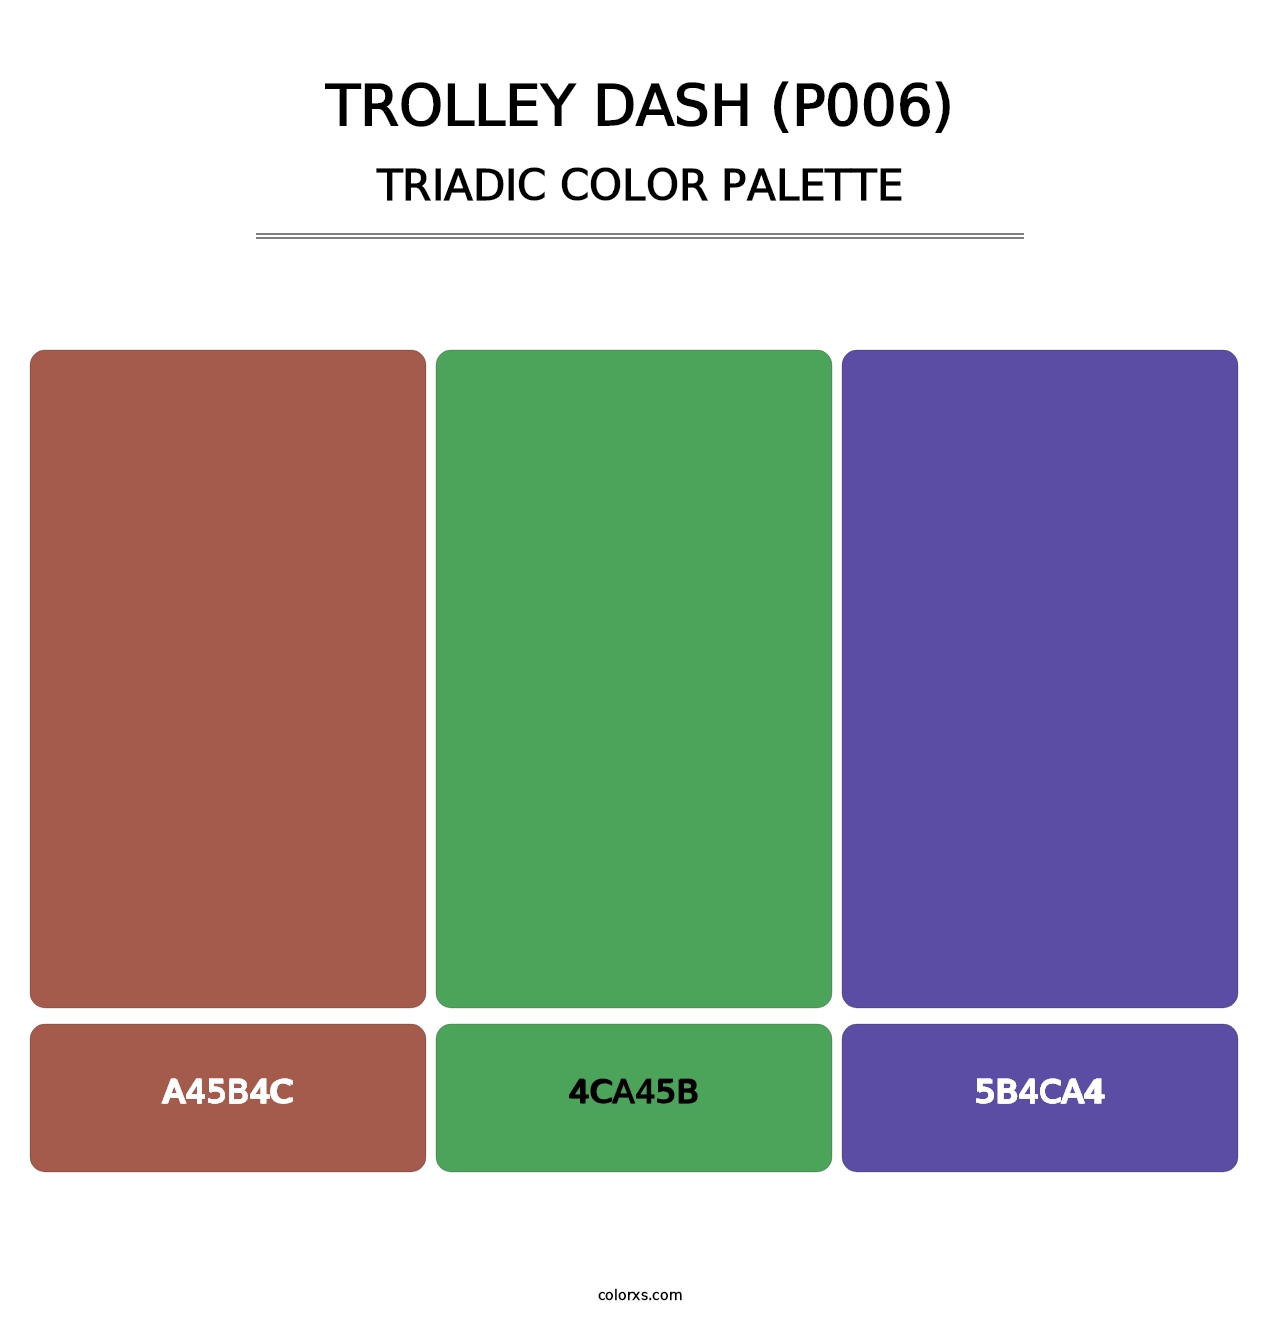 Trolley Dash (P006) - Triadic Color Palette